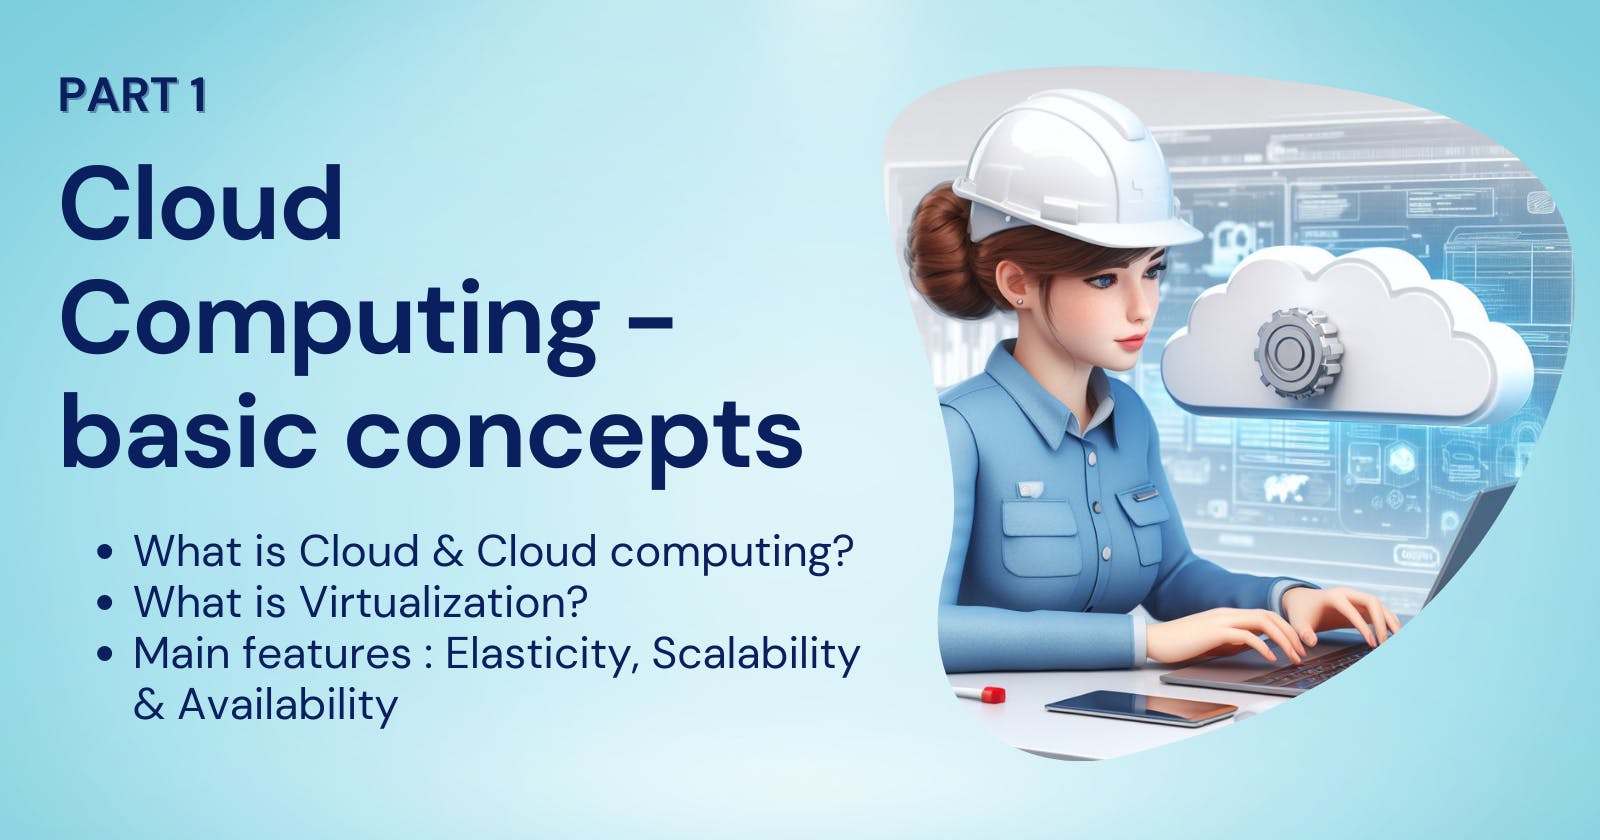 Cloud computing basics - Part 1